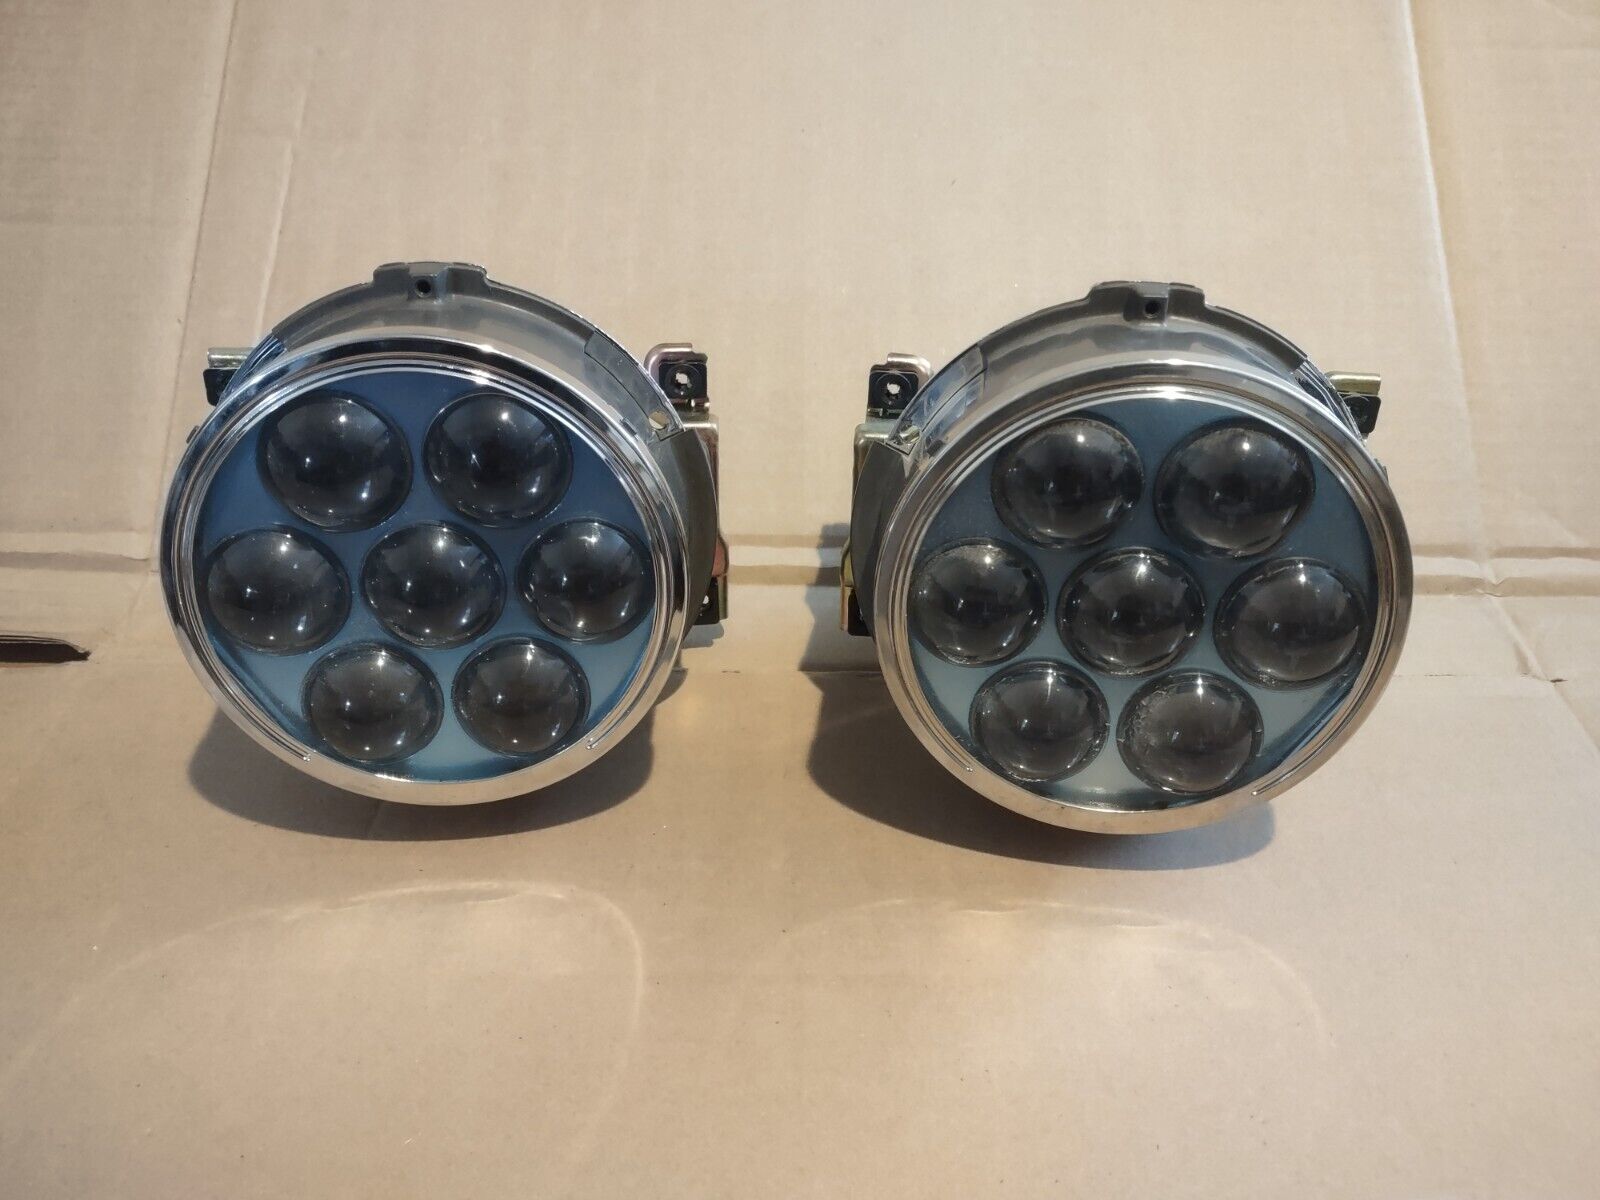 Infinit Q45 Gatling Style Mulit Lens HID Projector Light Lenses Projectors